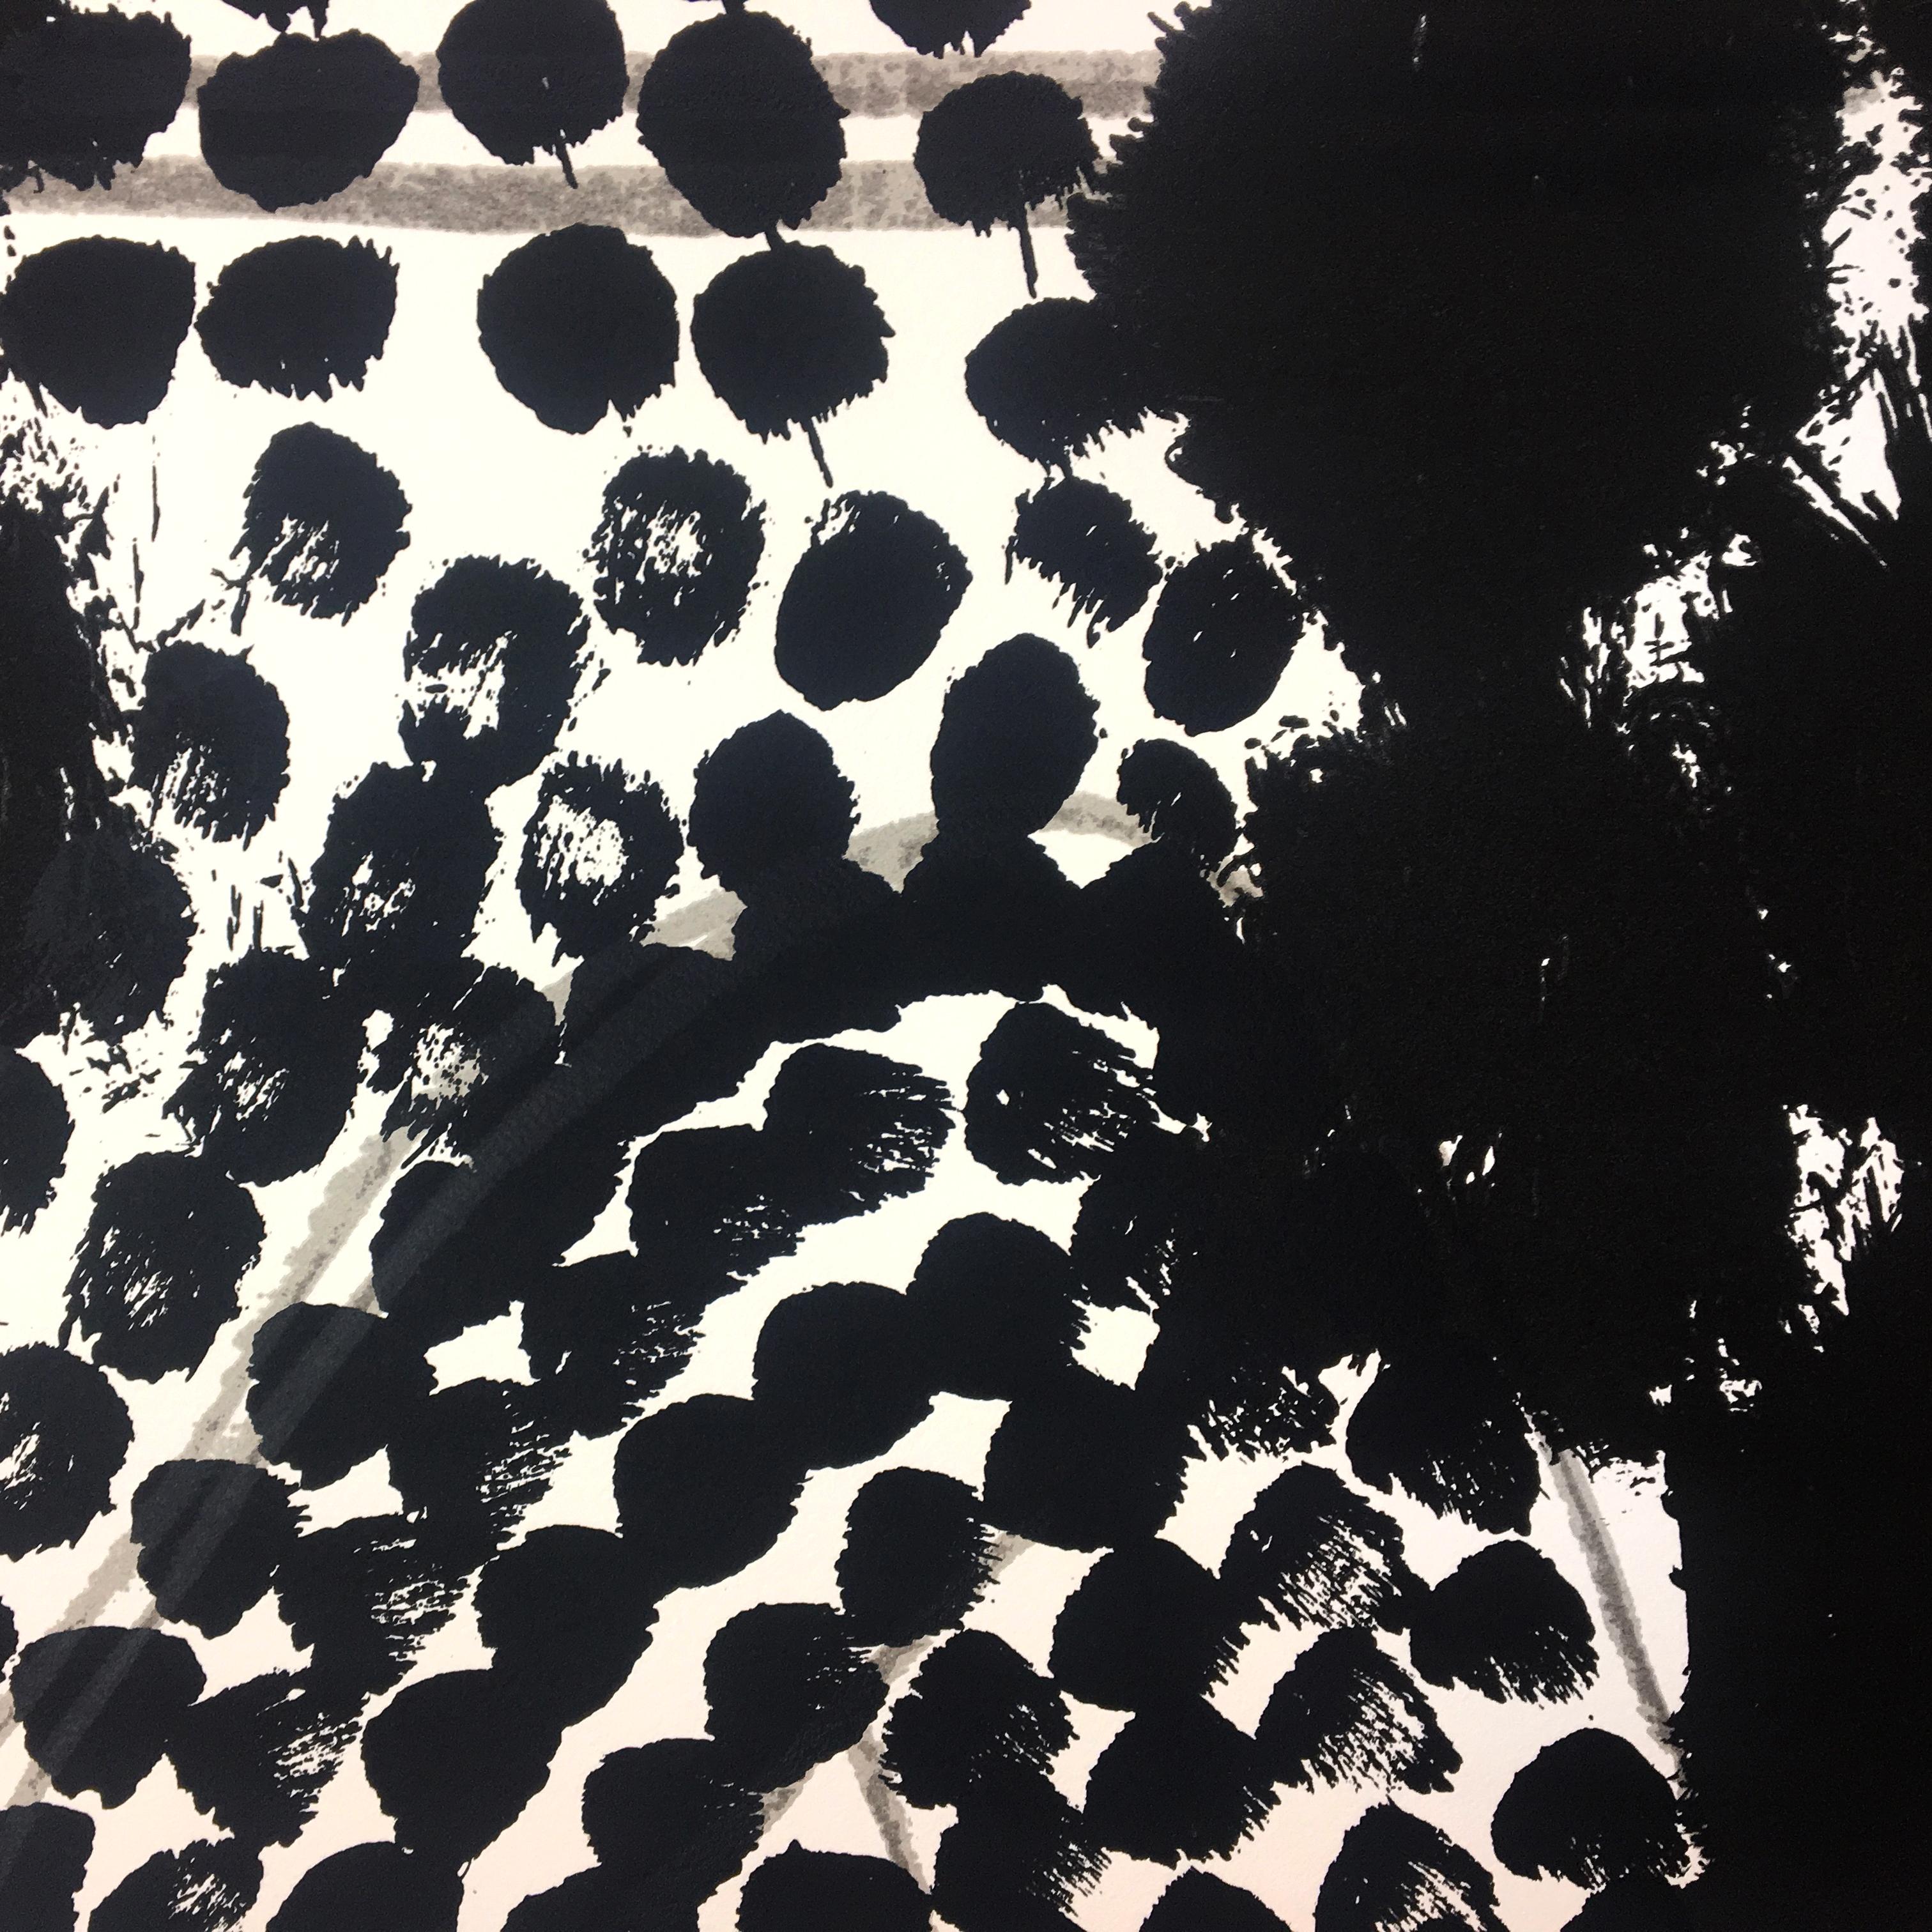 Souvenir, Howard Hodgkin: large scale black white gray abstract interior scene  For Sale 3